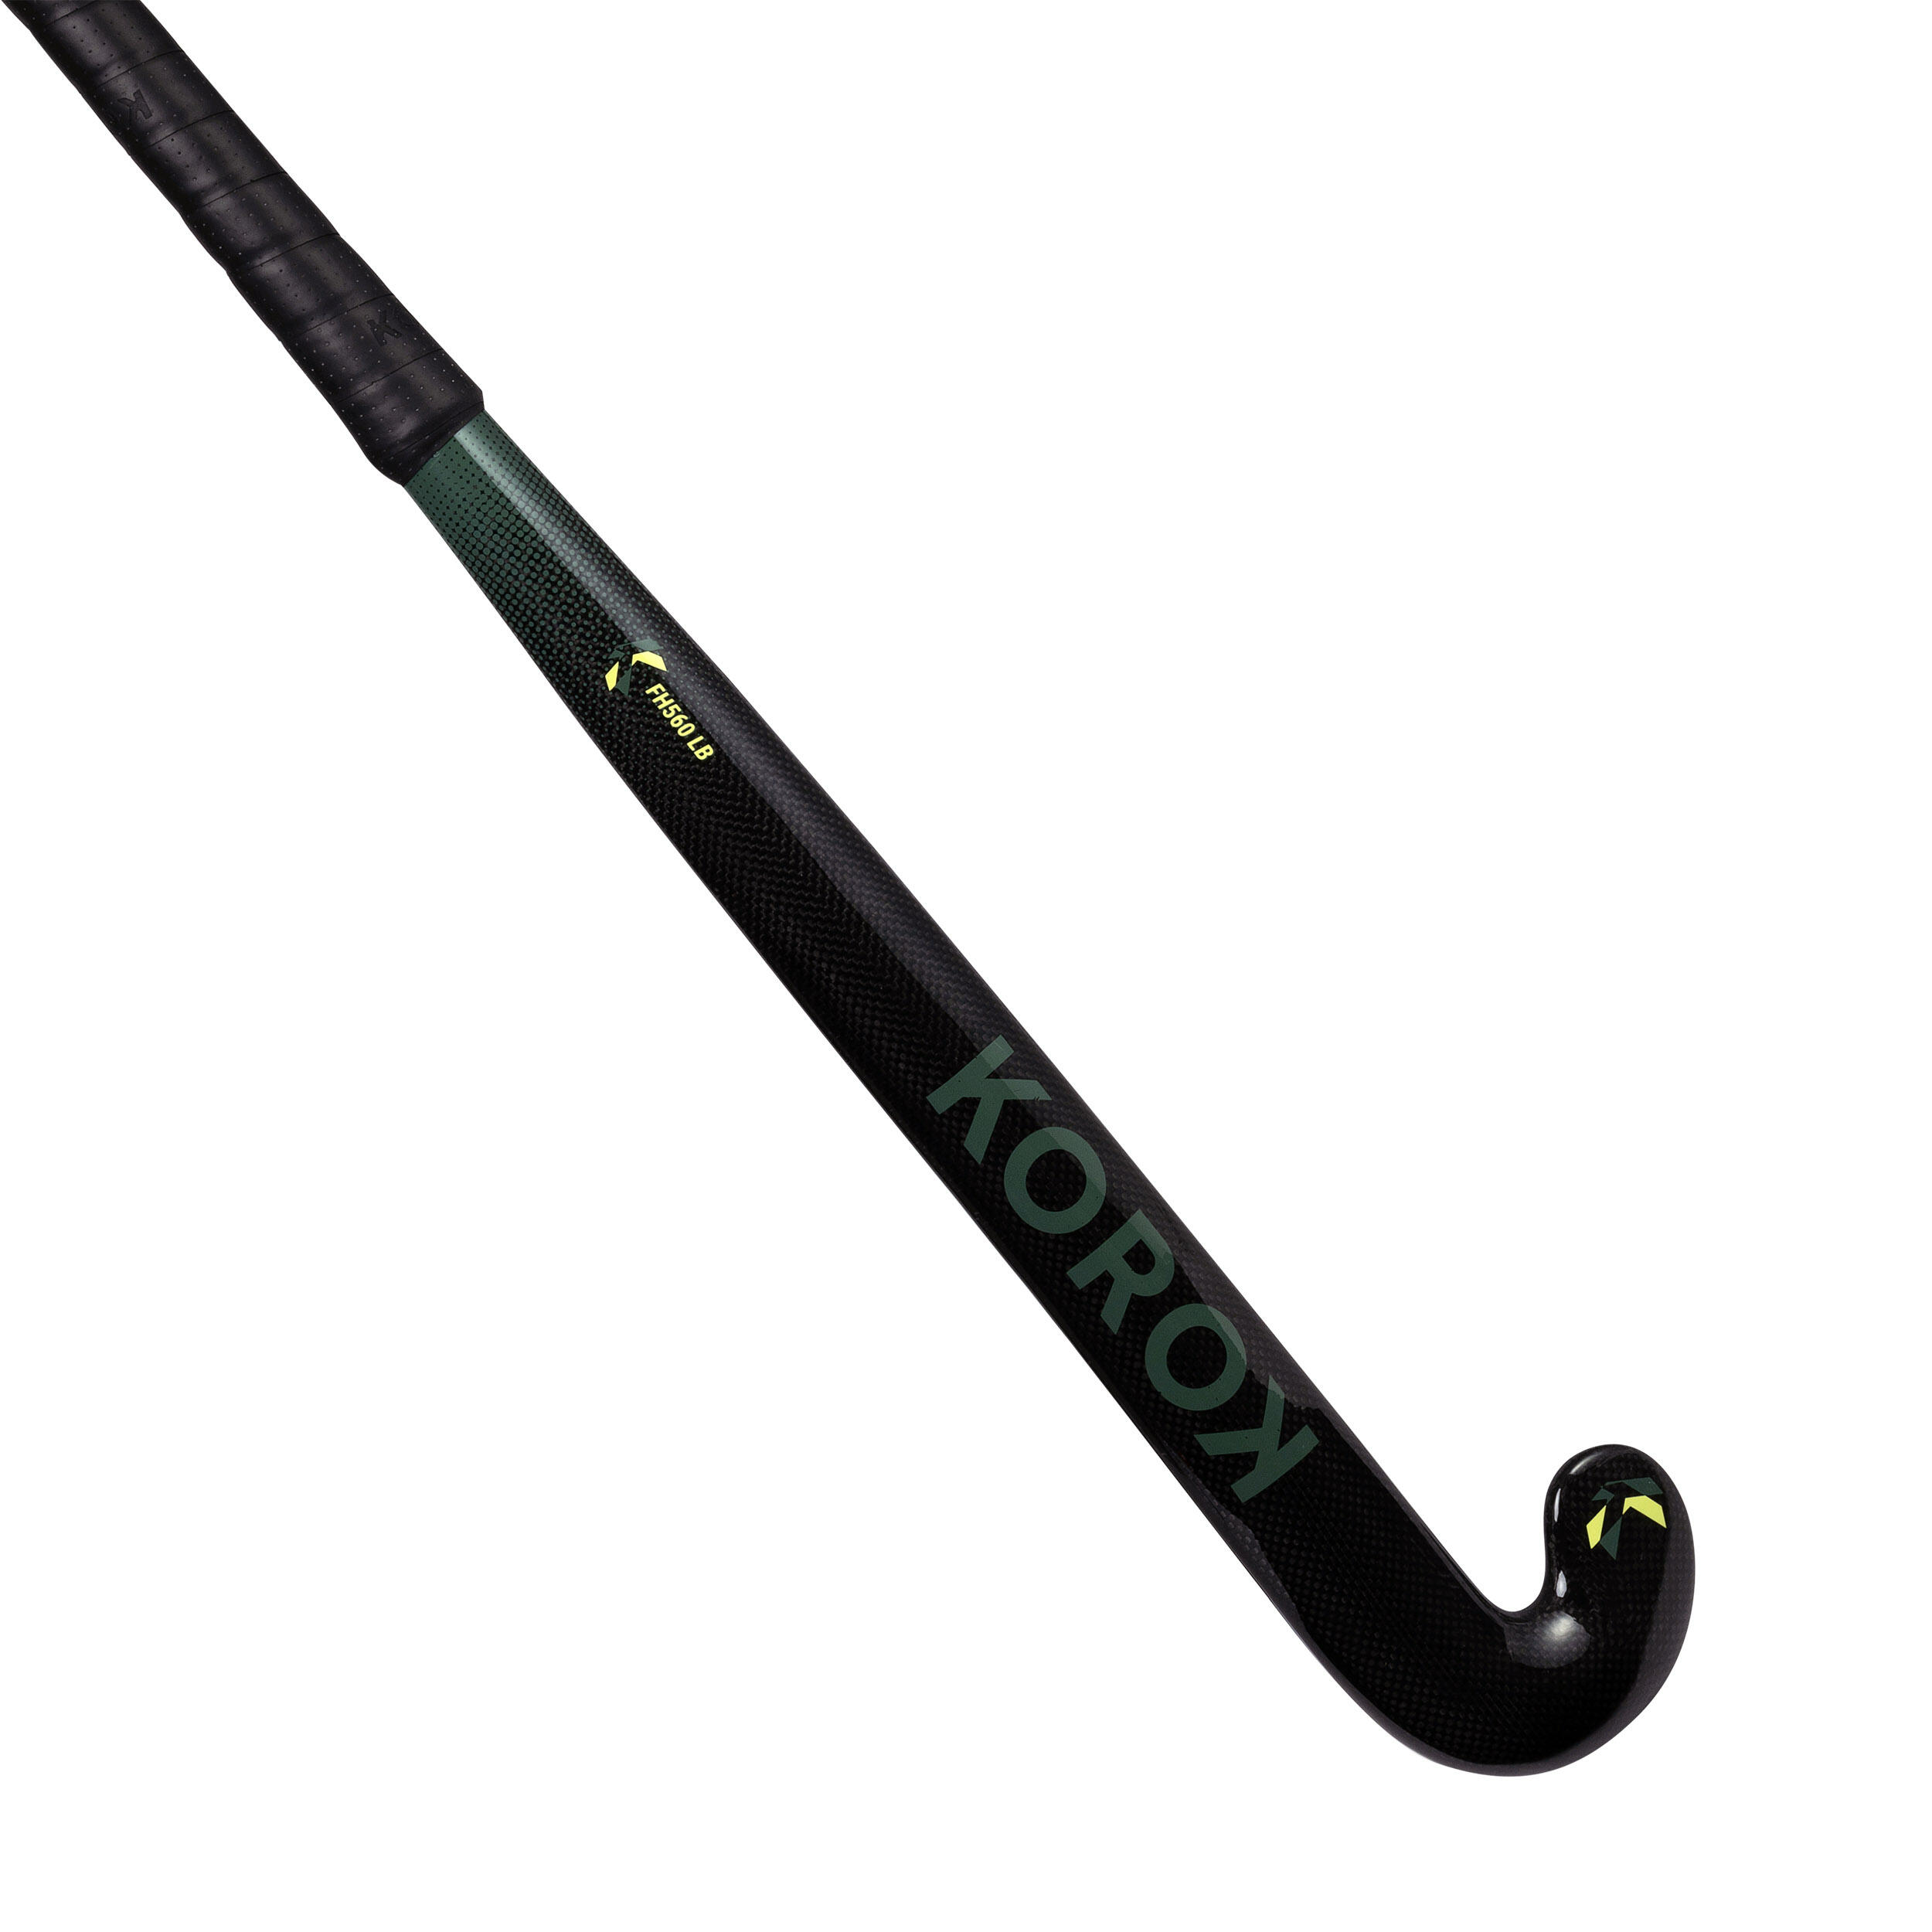 Adult Intermediate 60% Carbon Low Bow Field Hockey Stick FH560 - Black/Khaki 1/12